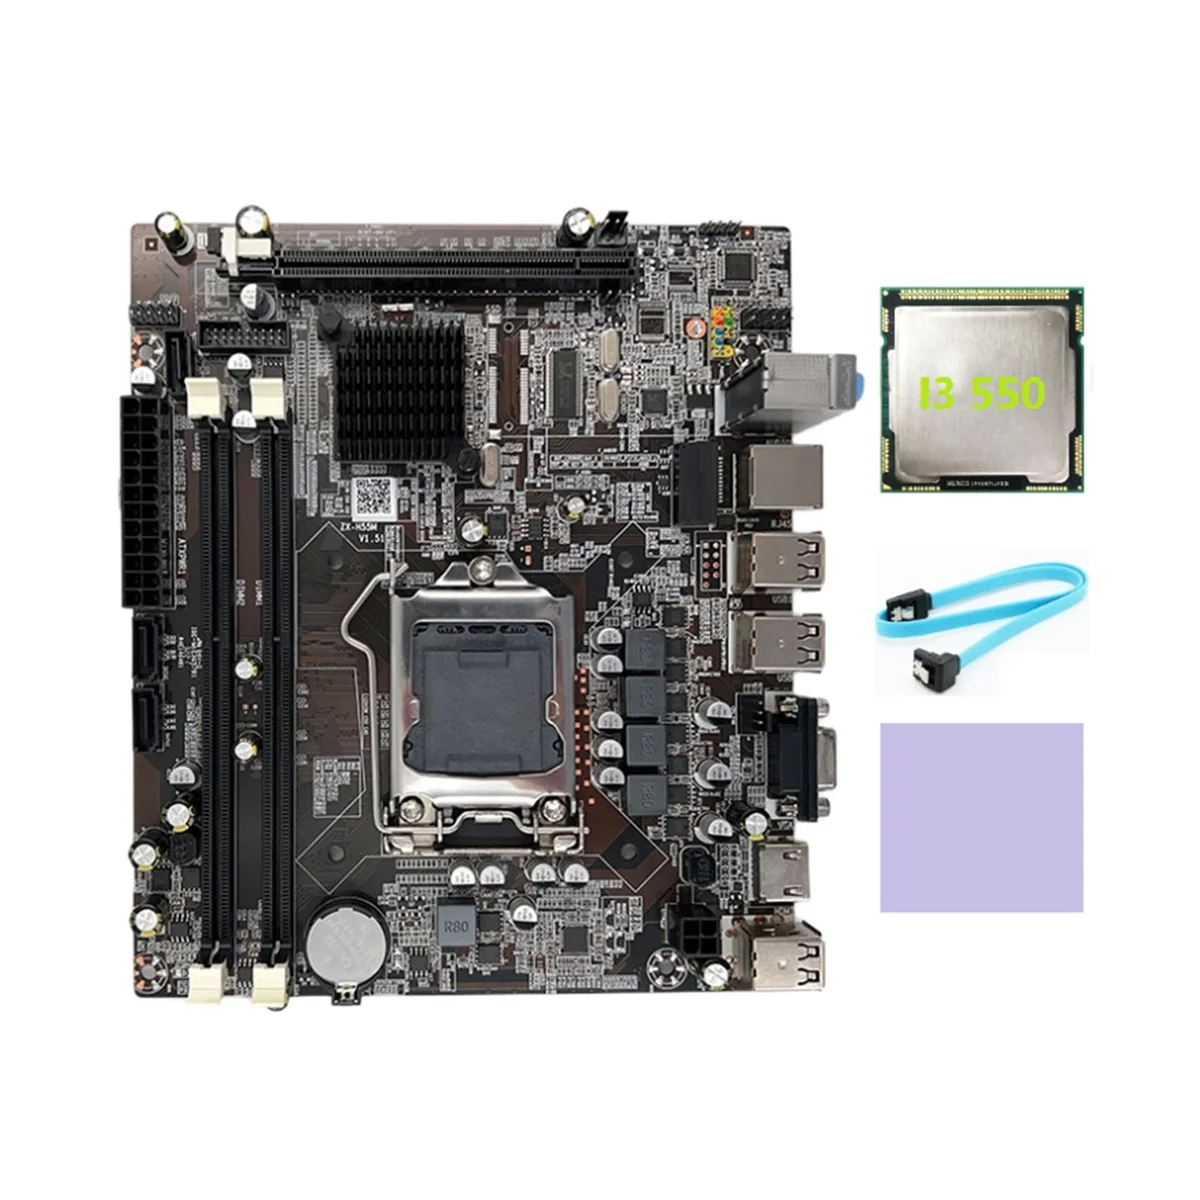 

H55 Motherboard LGA1156 Supports I3 530 I5 760 Series CPU DDR3 Memory Motherboard+I3 550 CPU+SATA Cable+Thermal Pad